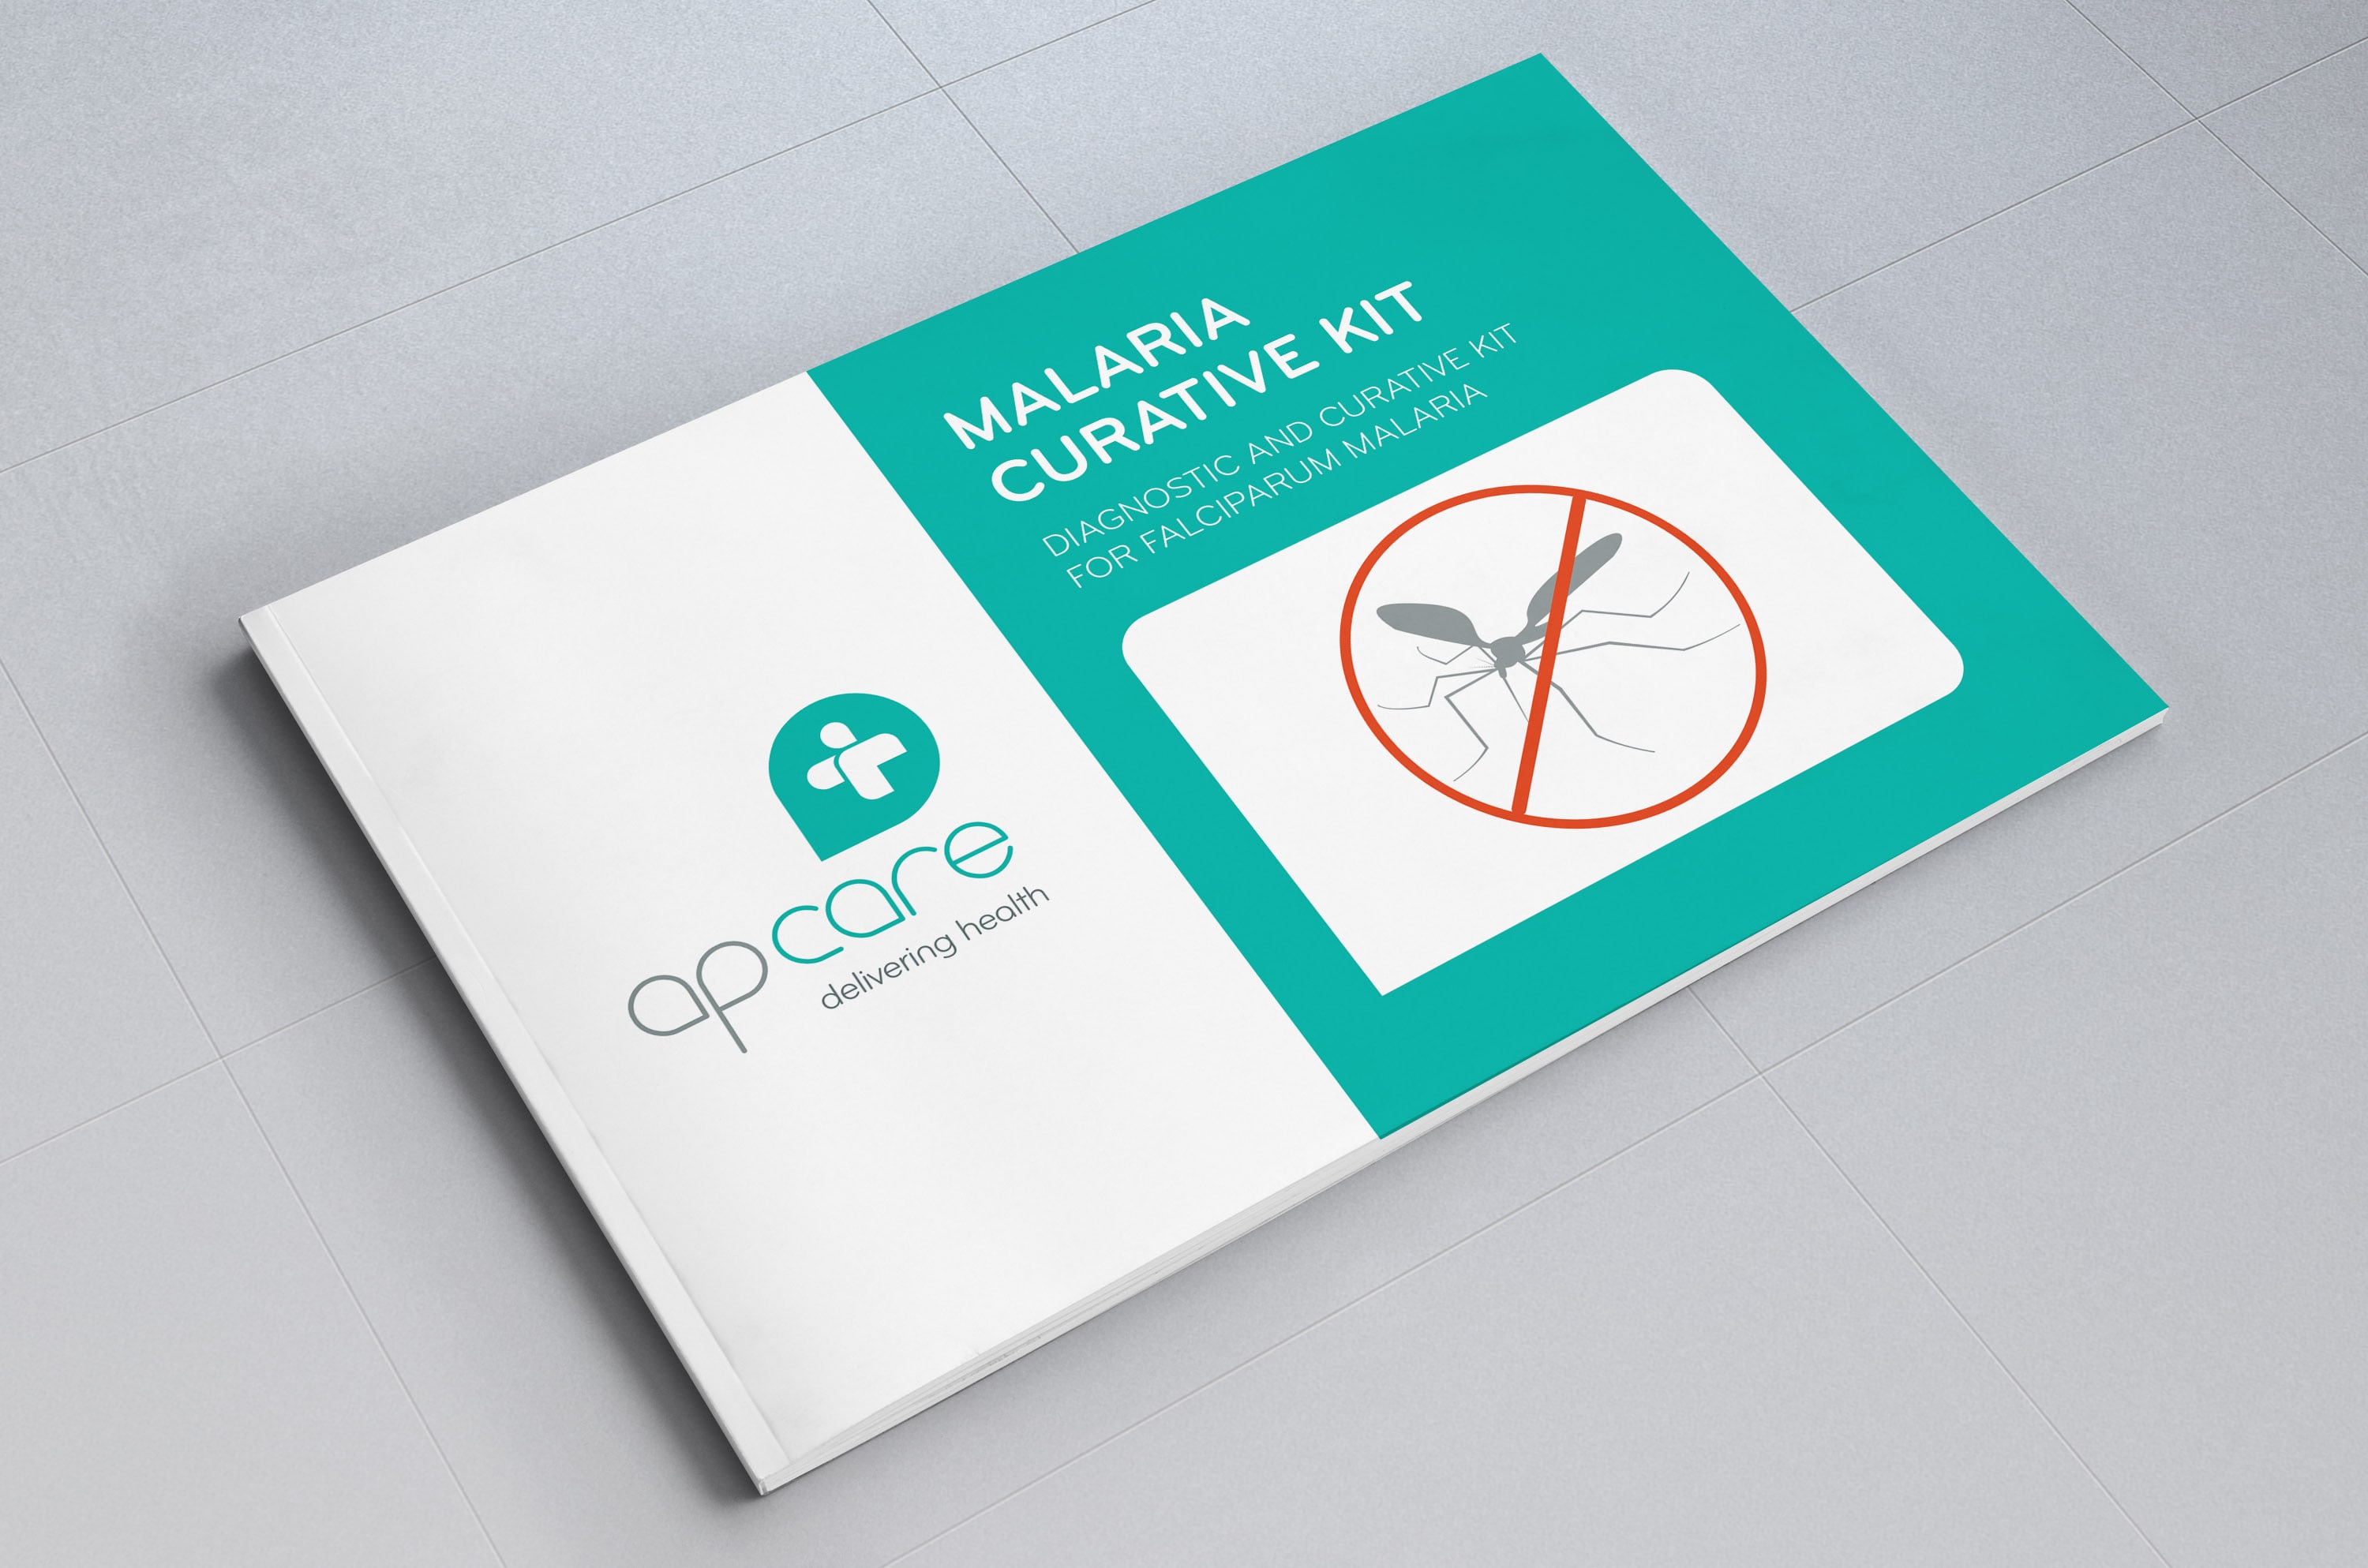 ap care malaria kit booklet 01